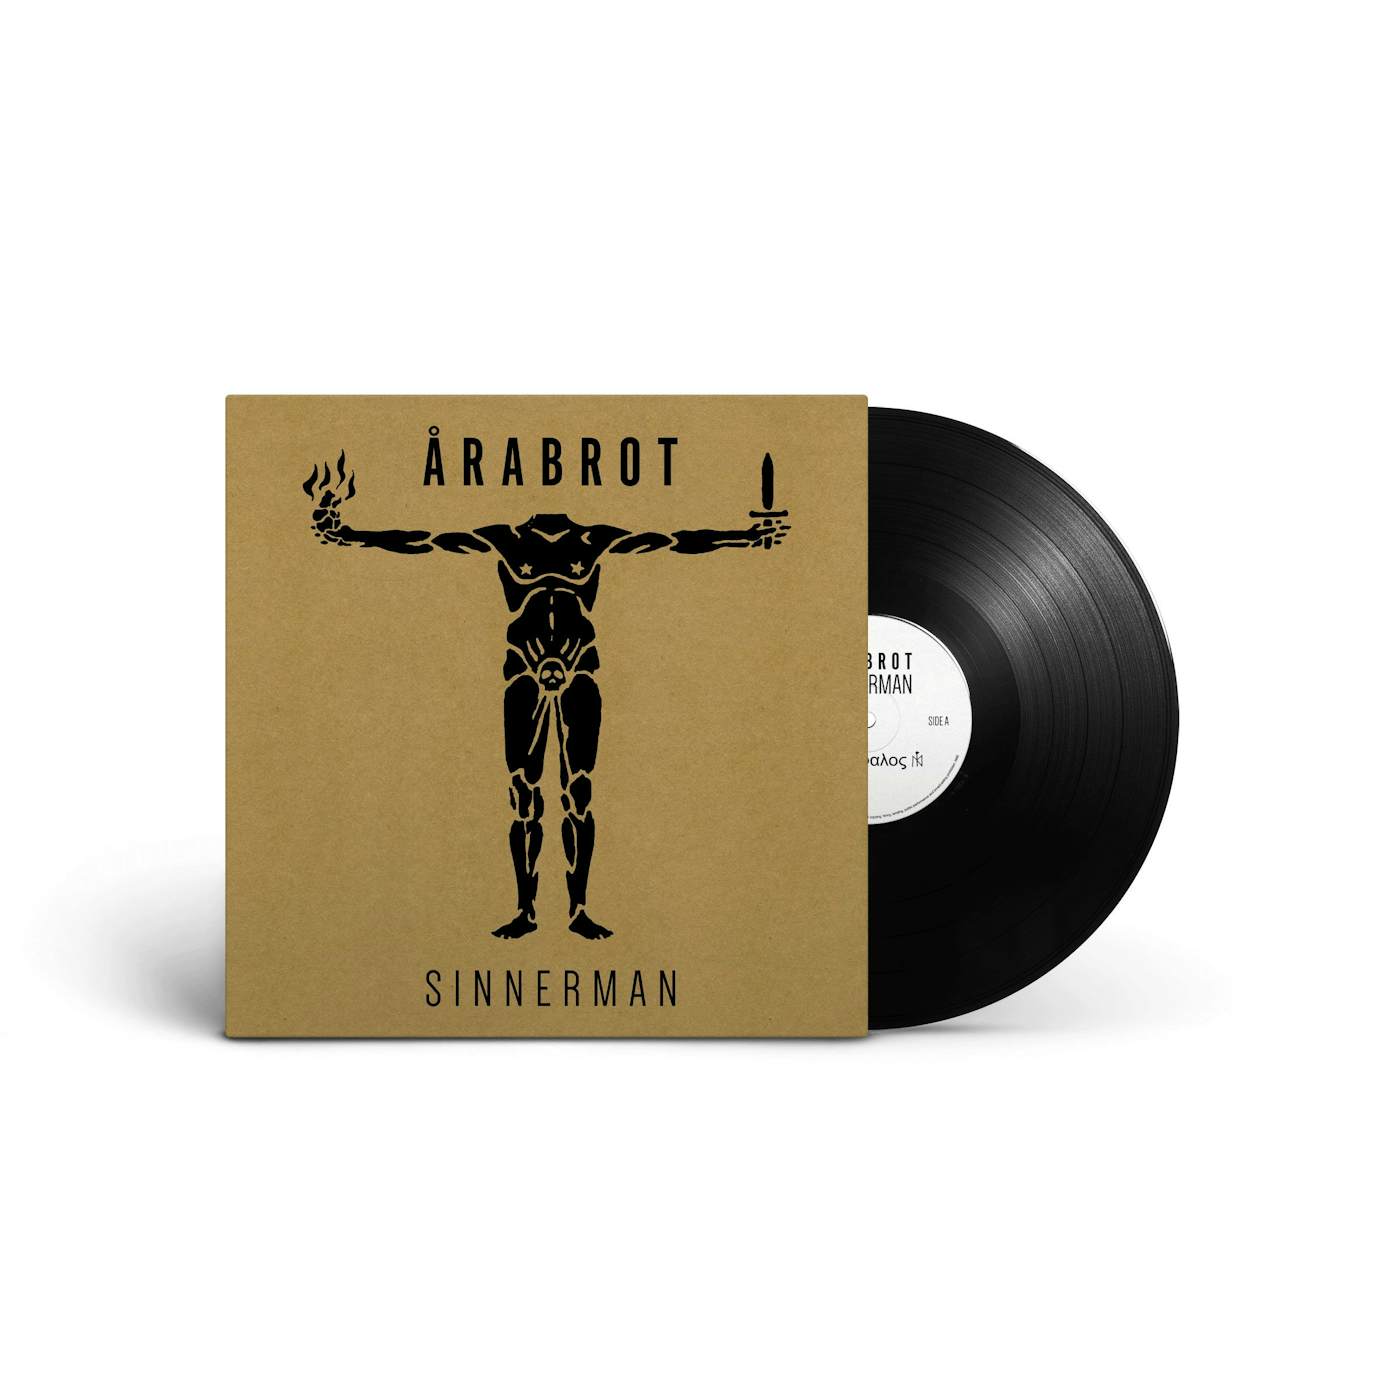 Årabrot "Sinnerman EP" 12" (Vinyl)